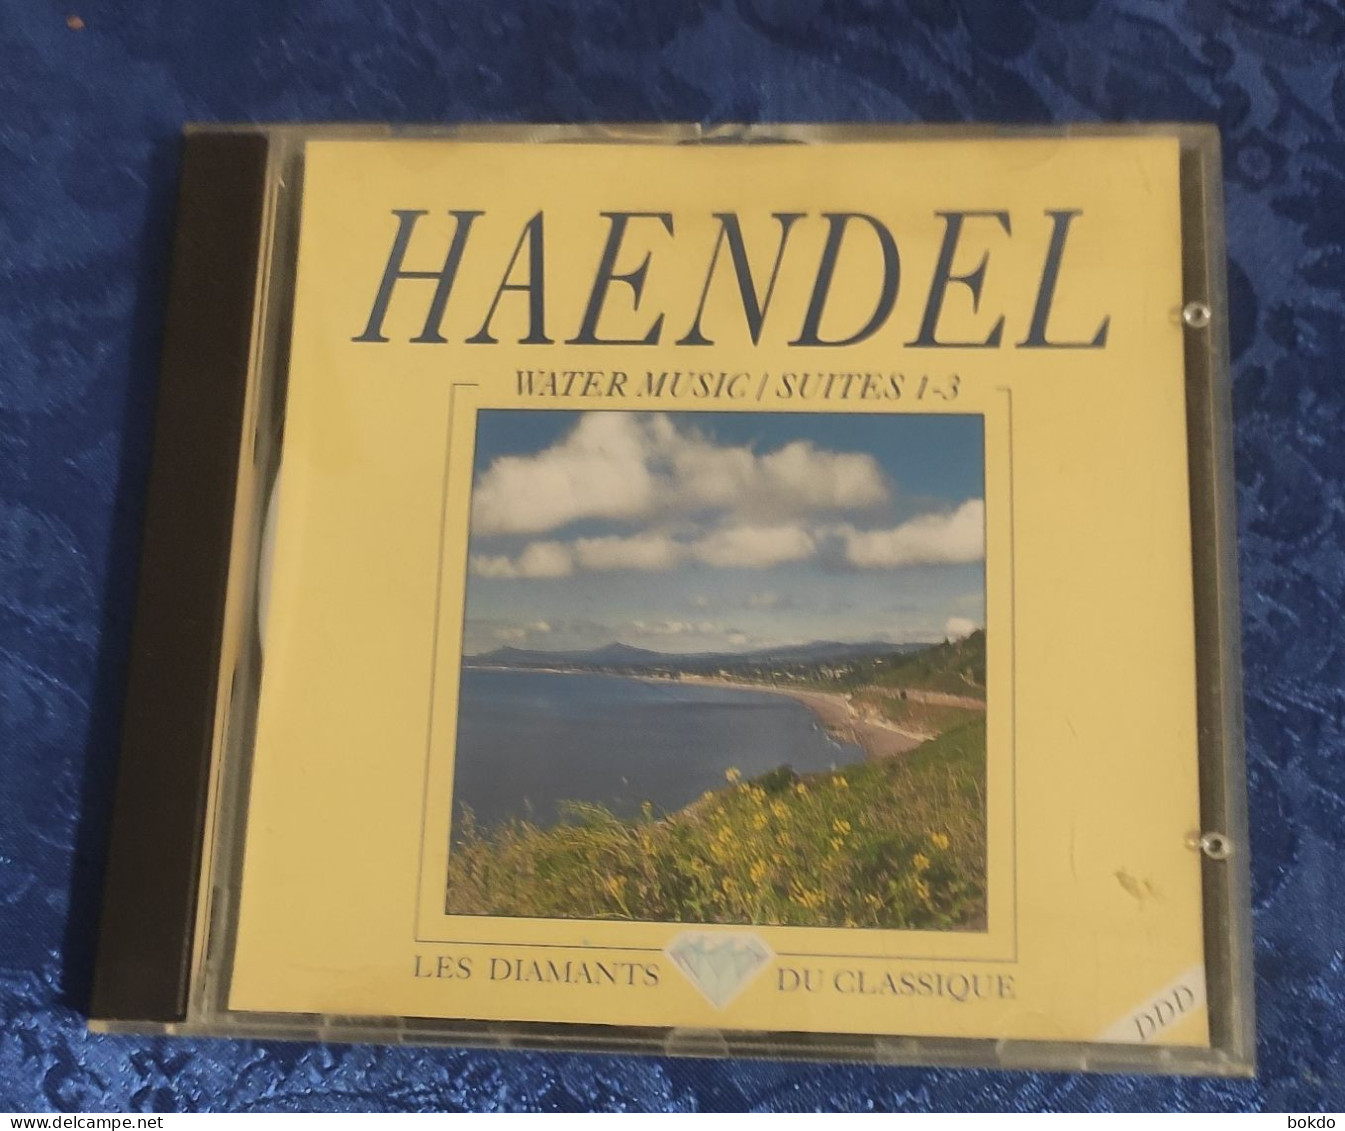 HEABDEL - Water Music Suites 1-3 - Klassiekers